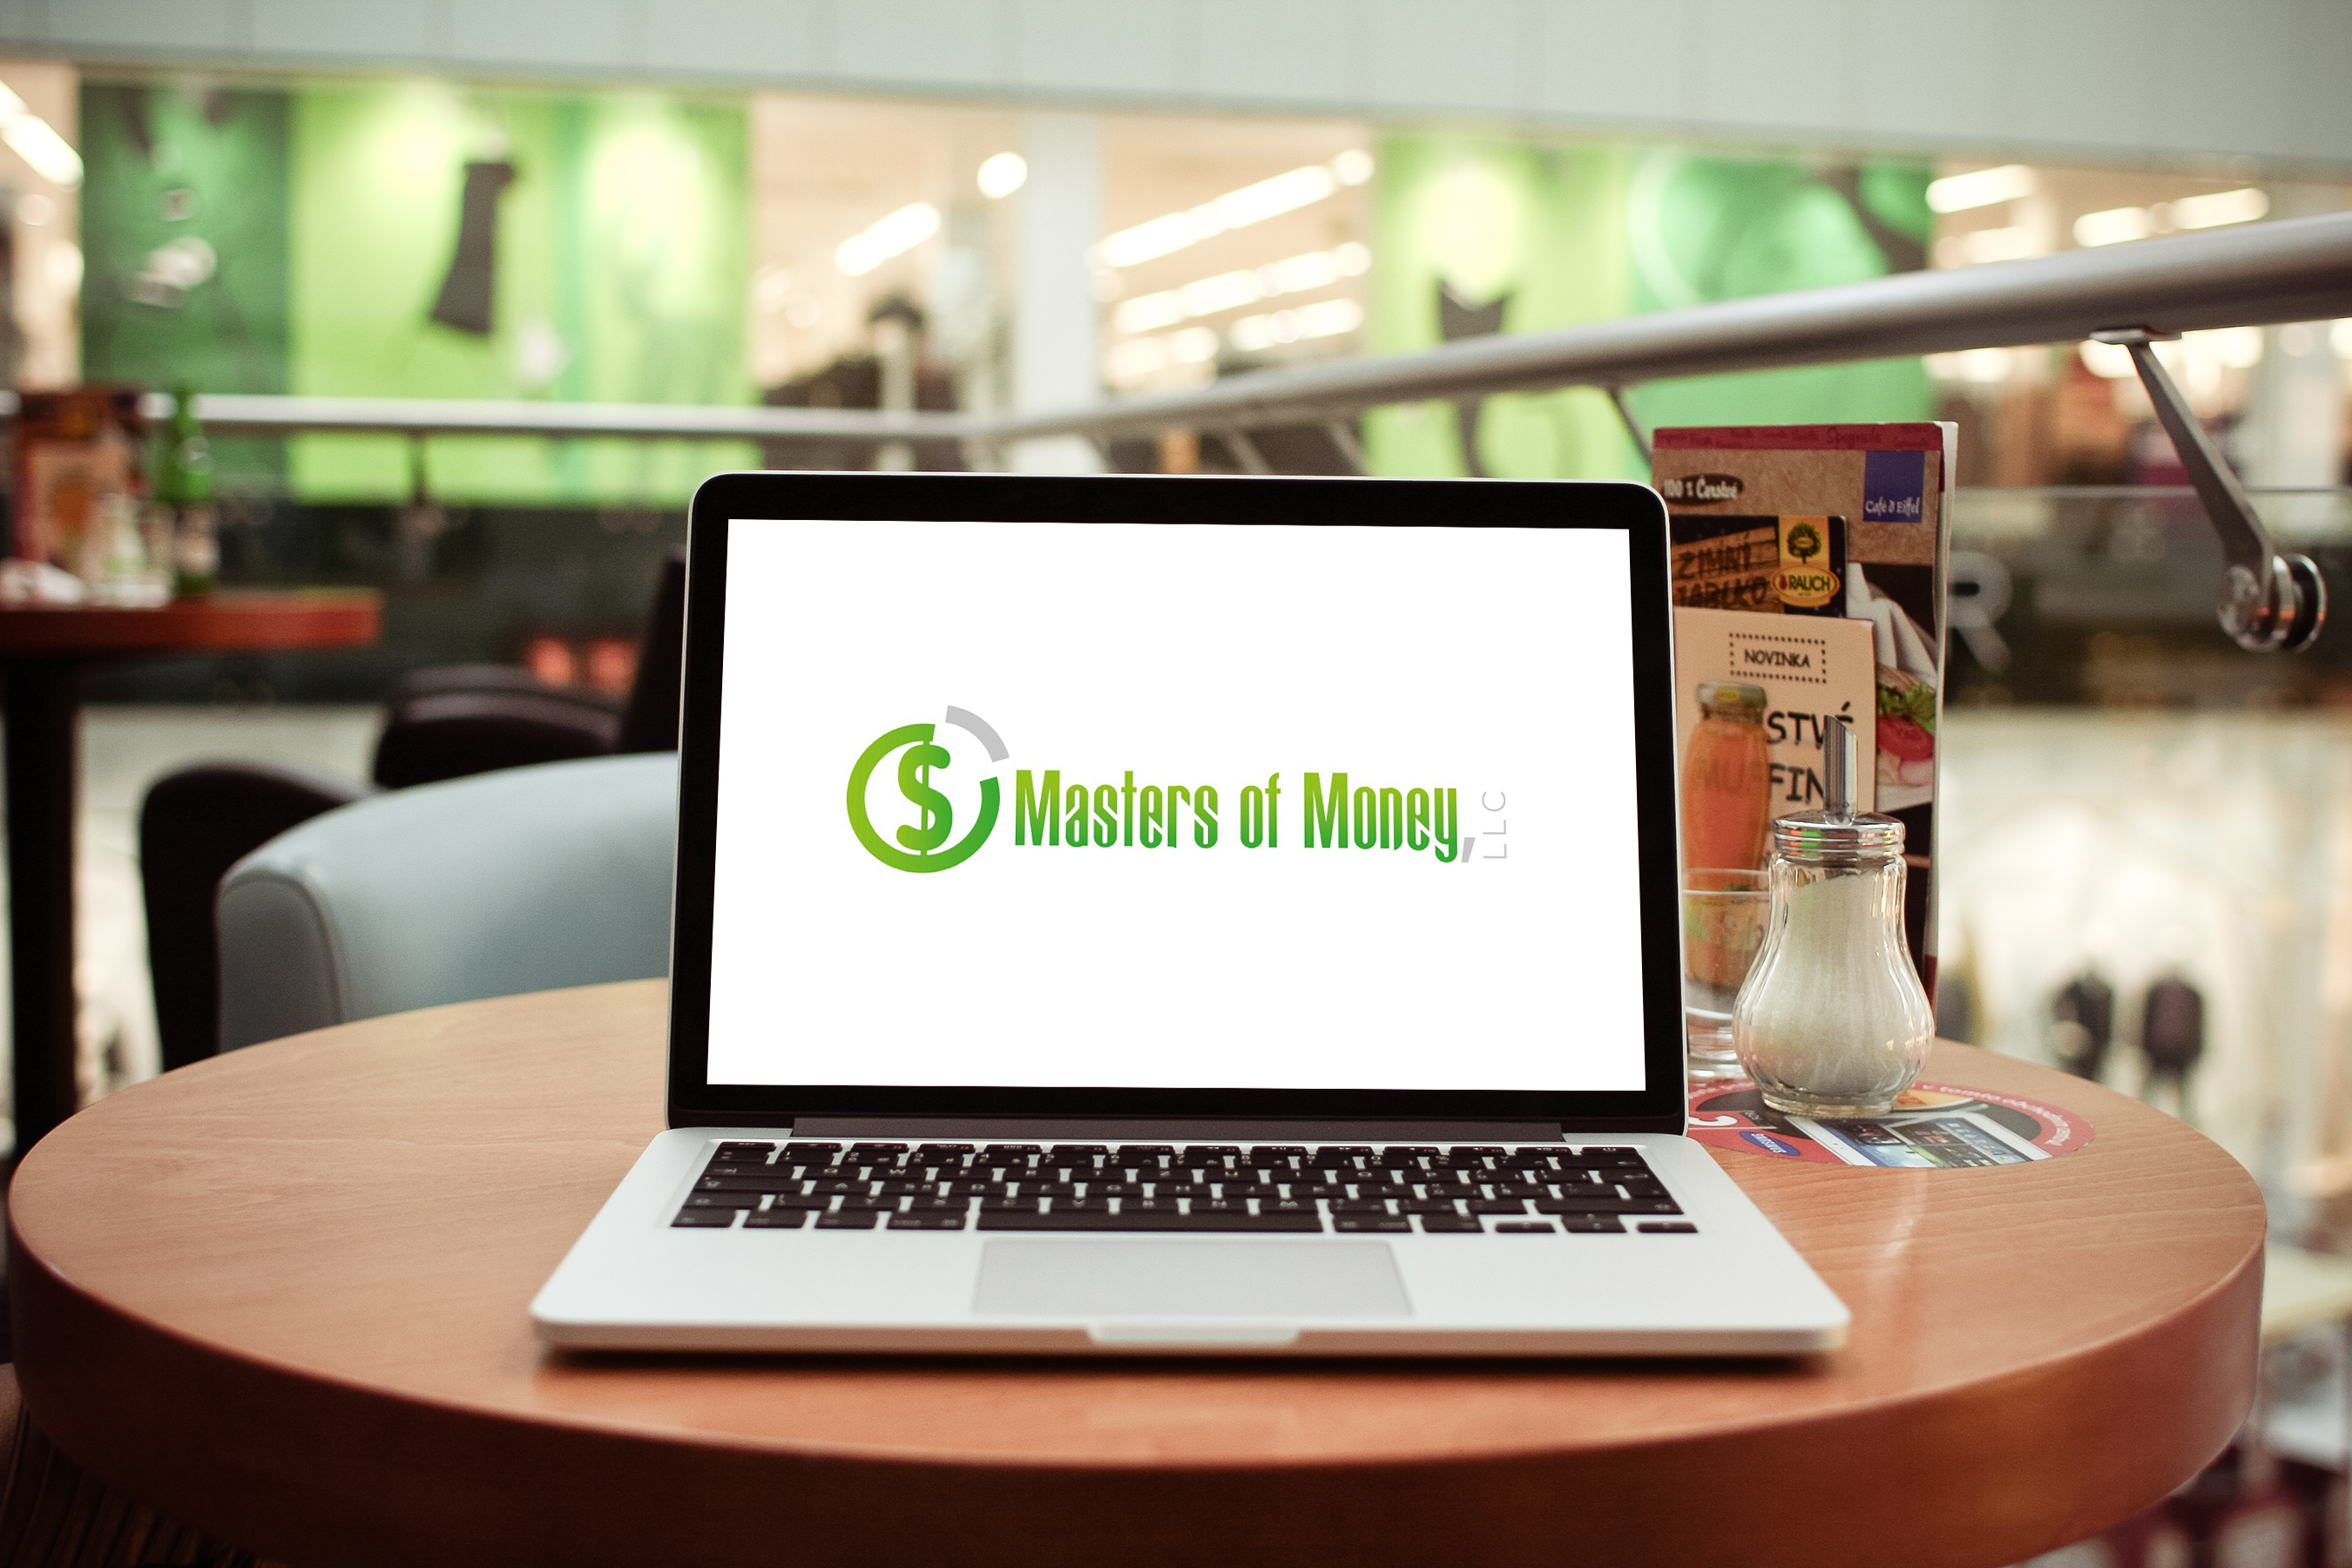 Masters of Money is on Google+ at: https://plus.google.com/u/0/+MastersofMoney